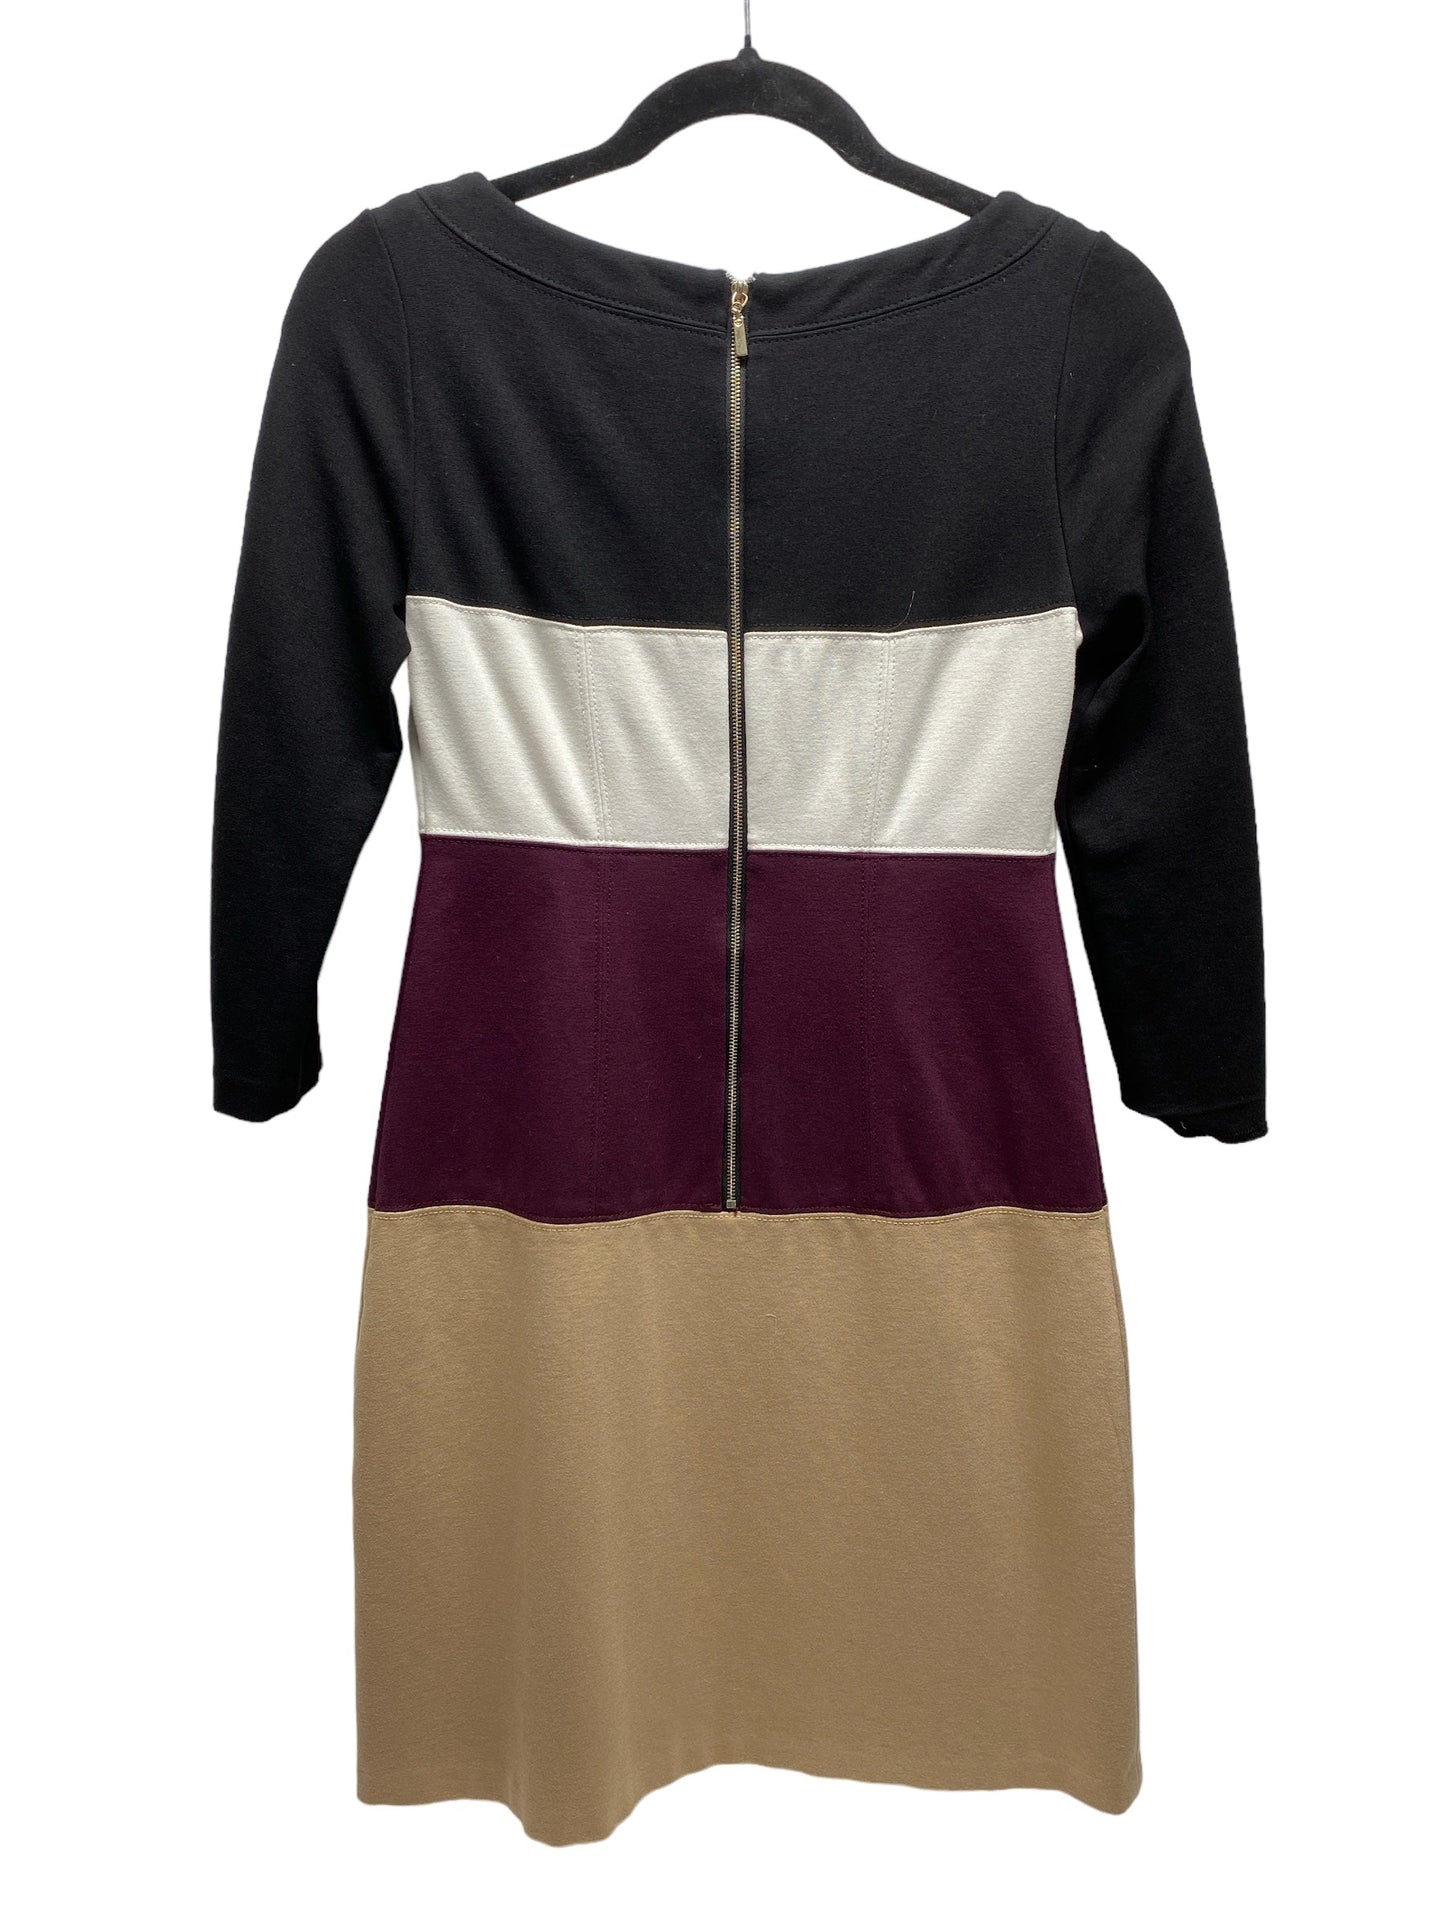 Dress Casual Short By White House Black Market  Size: Xxs